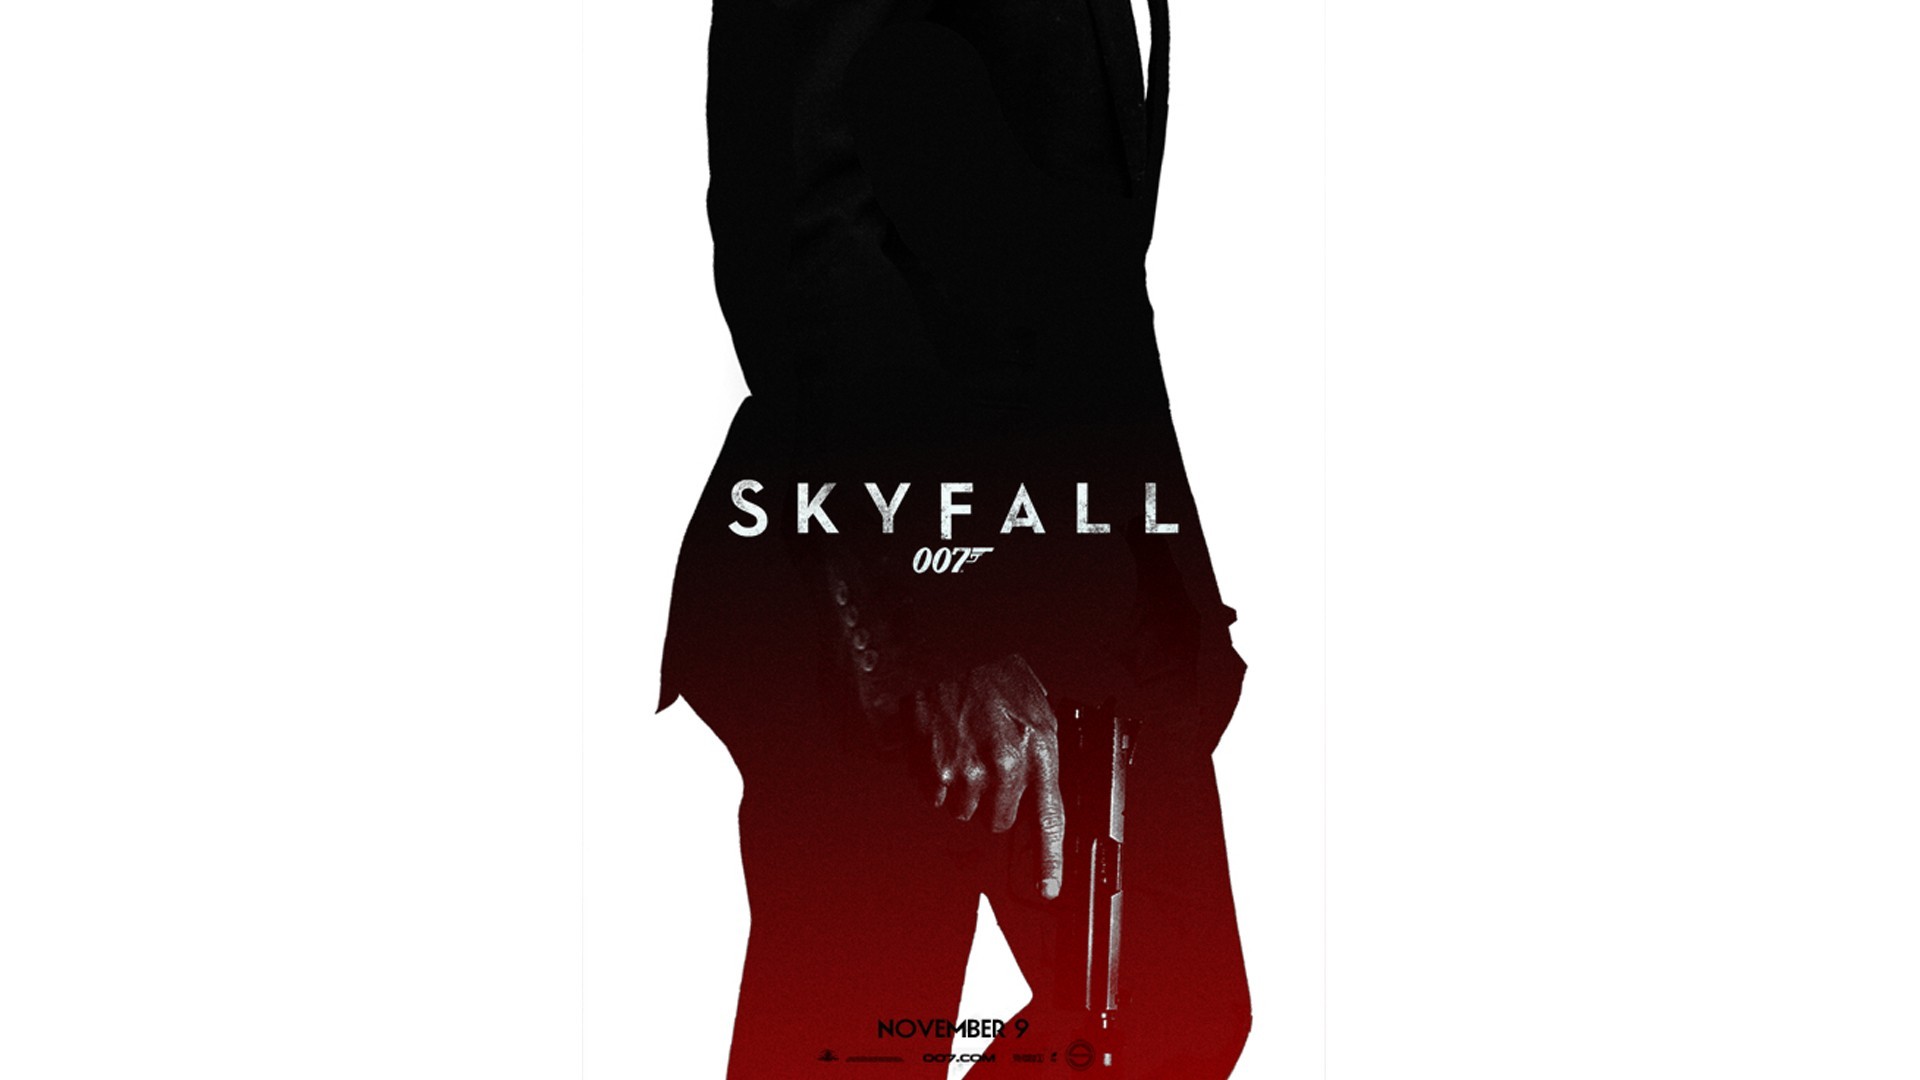 General 1920x1080 movies James Bond Skyfall simple background gun white background